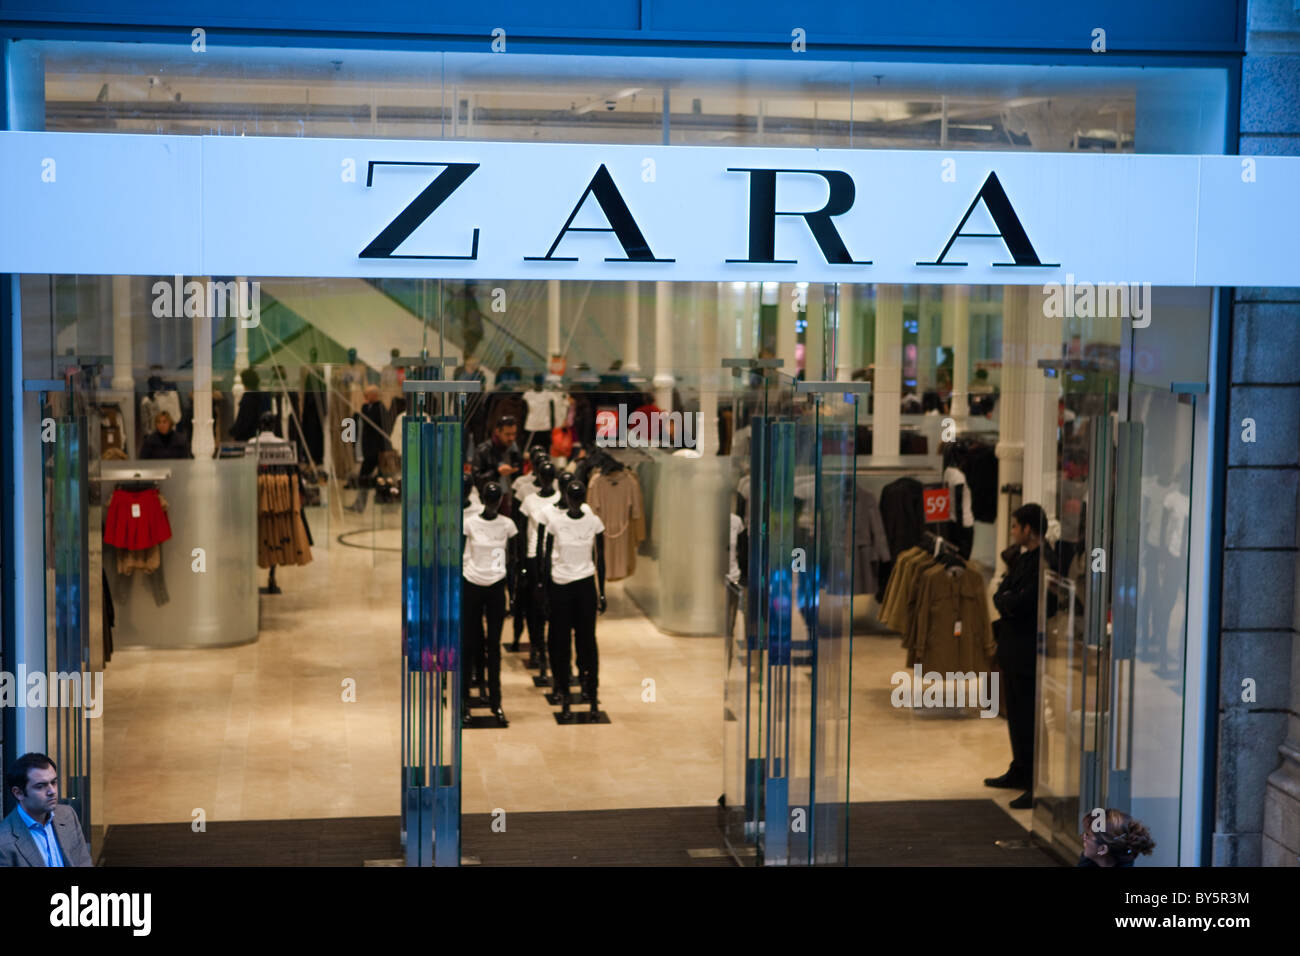 Store window Zara sign entrance Rome Italy shopping Stock Photo - Alamy